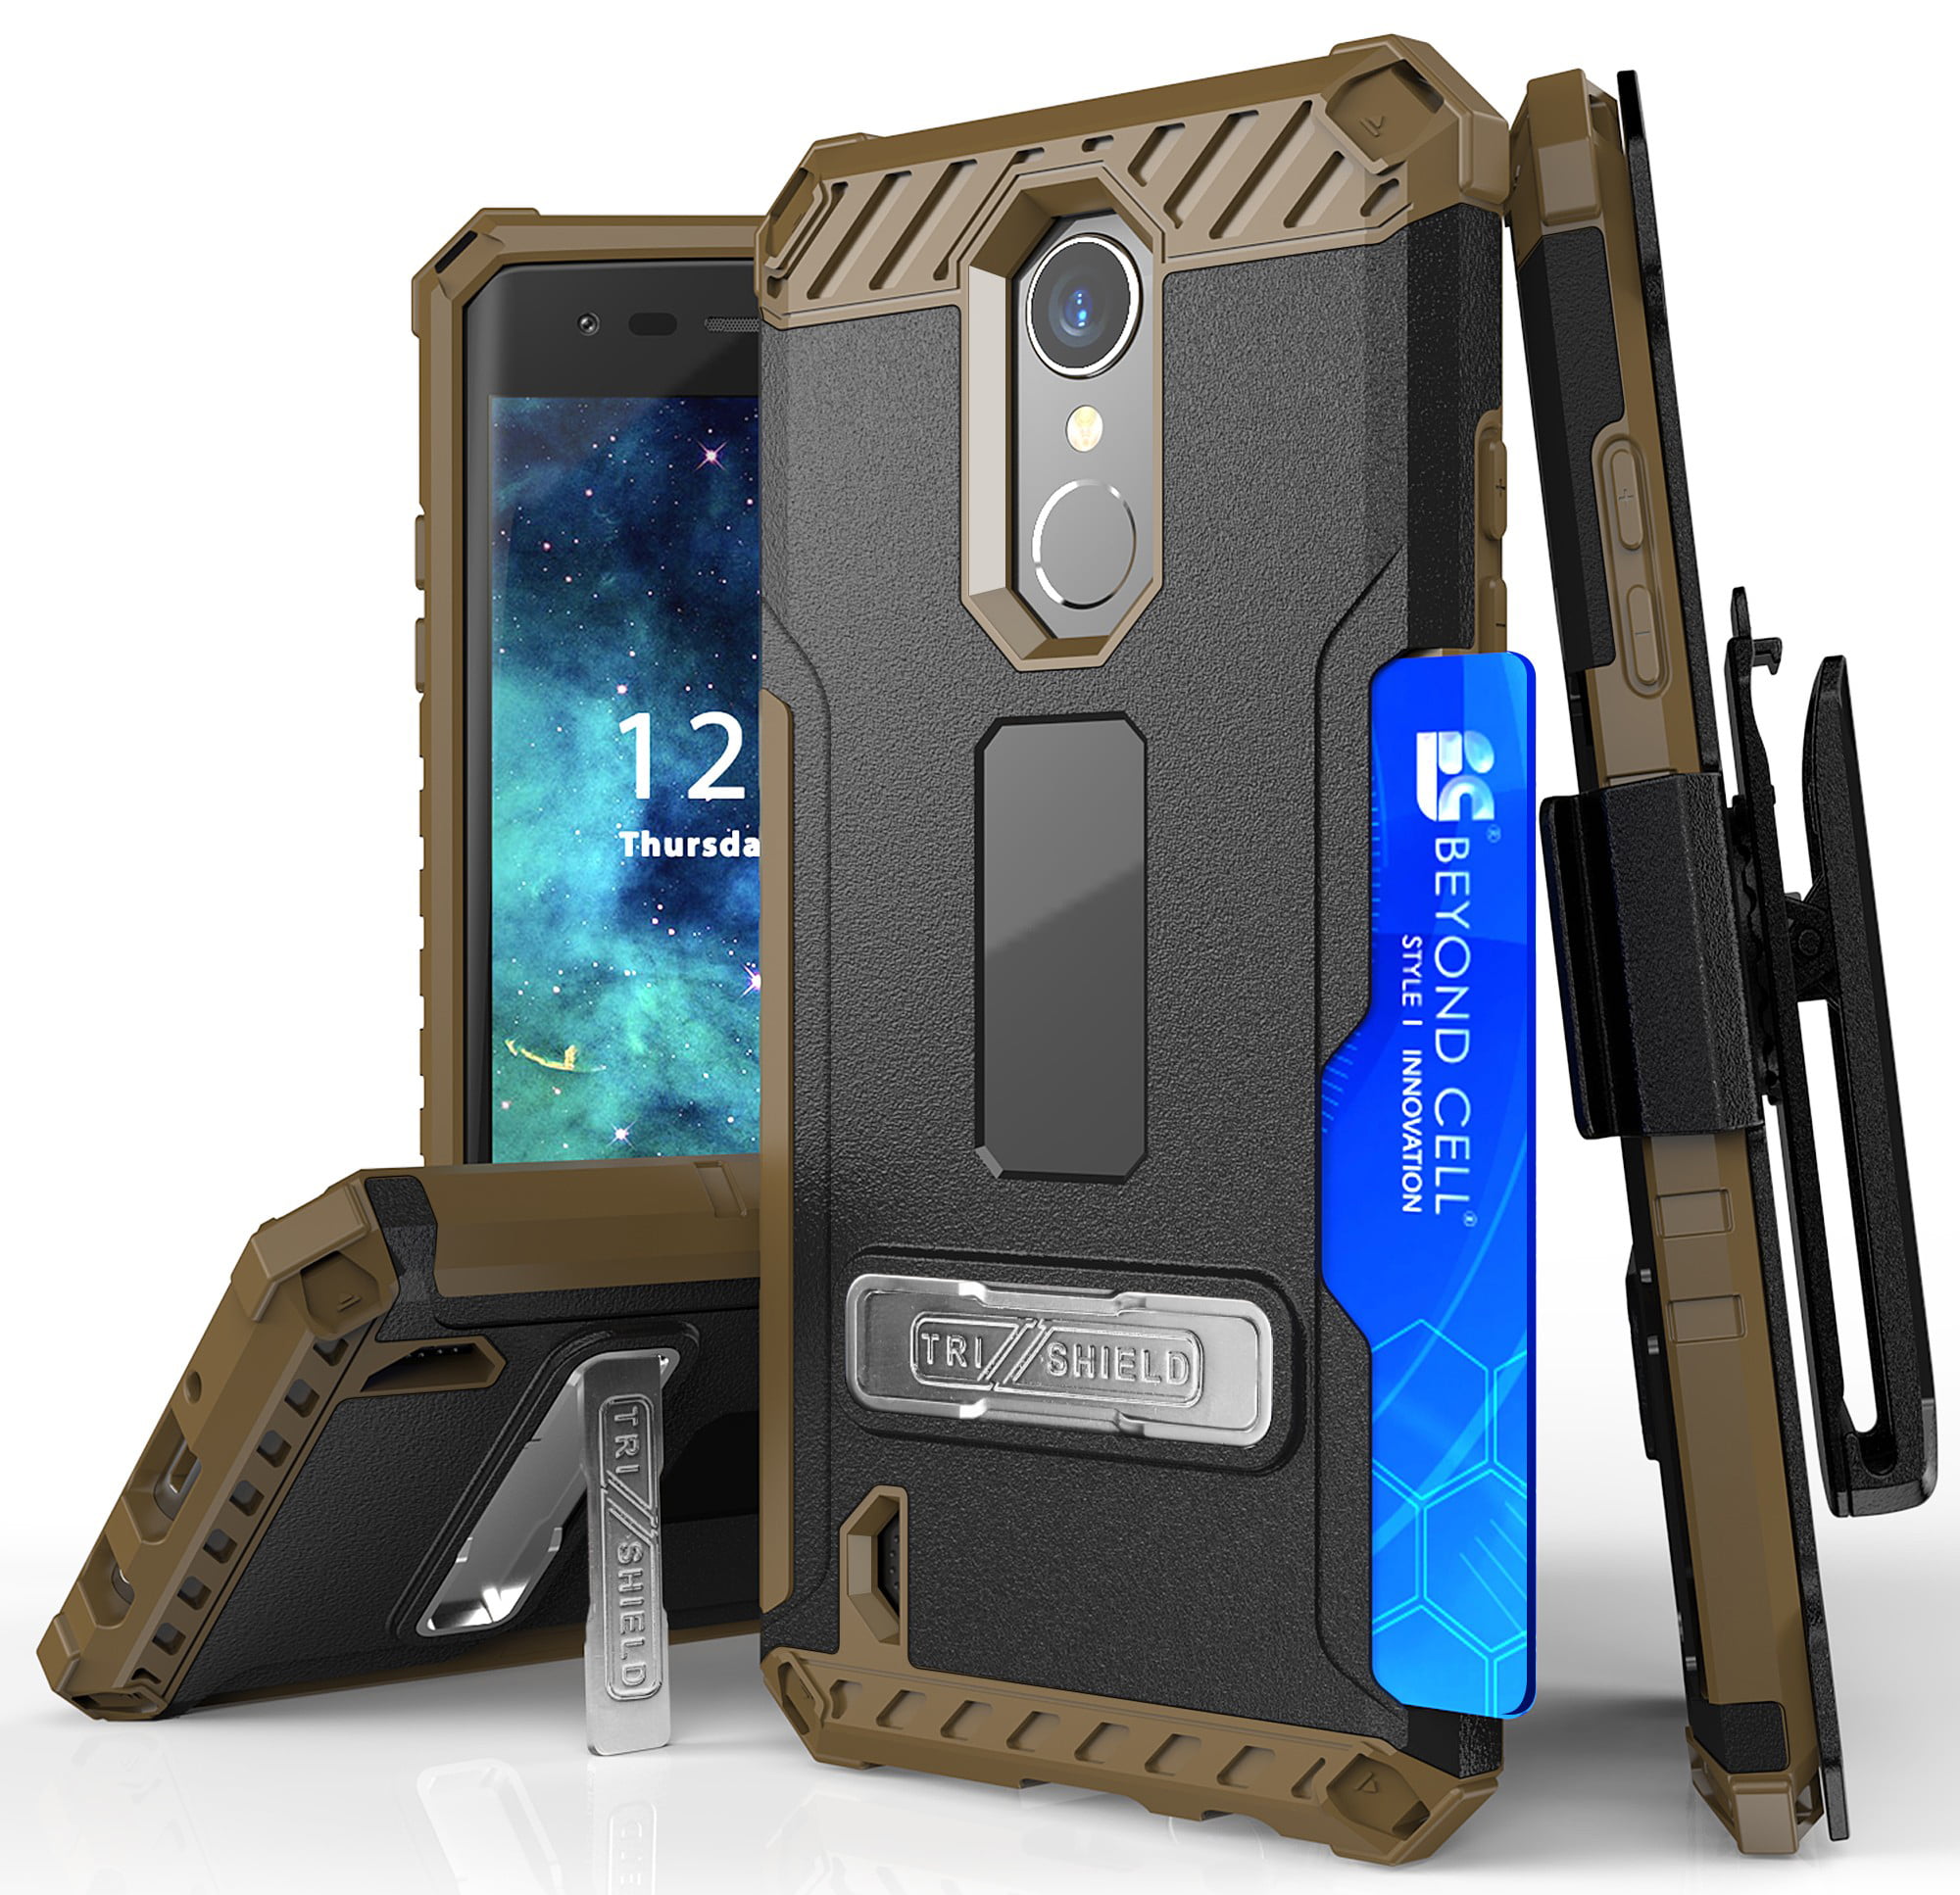 LG Phoenix 3 M150 & LG Fortune M153 Hybrid Armor Shockproof Phone Case Cover 